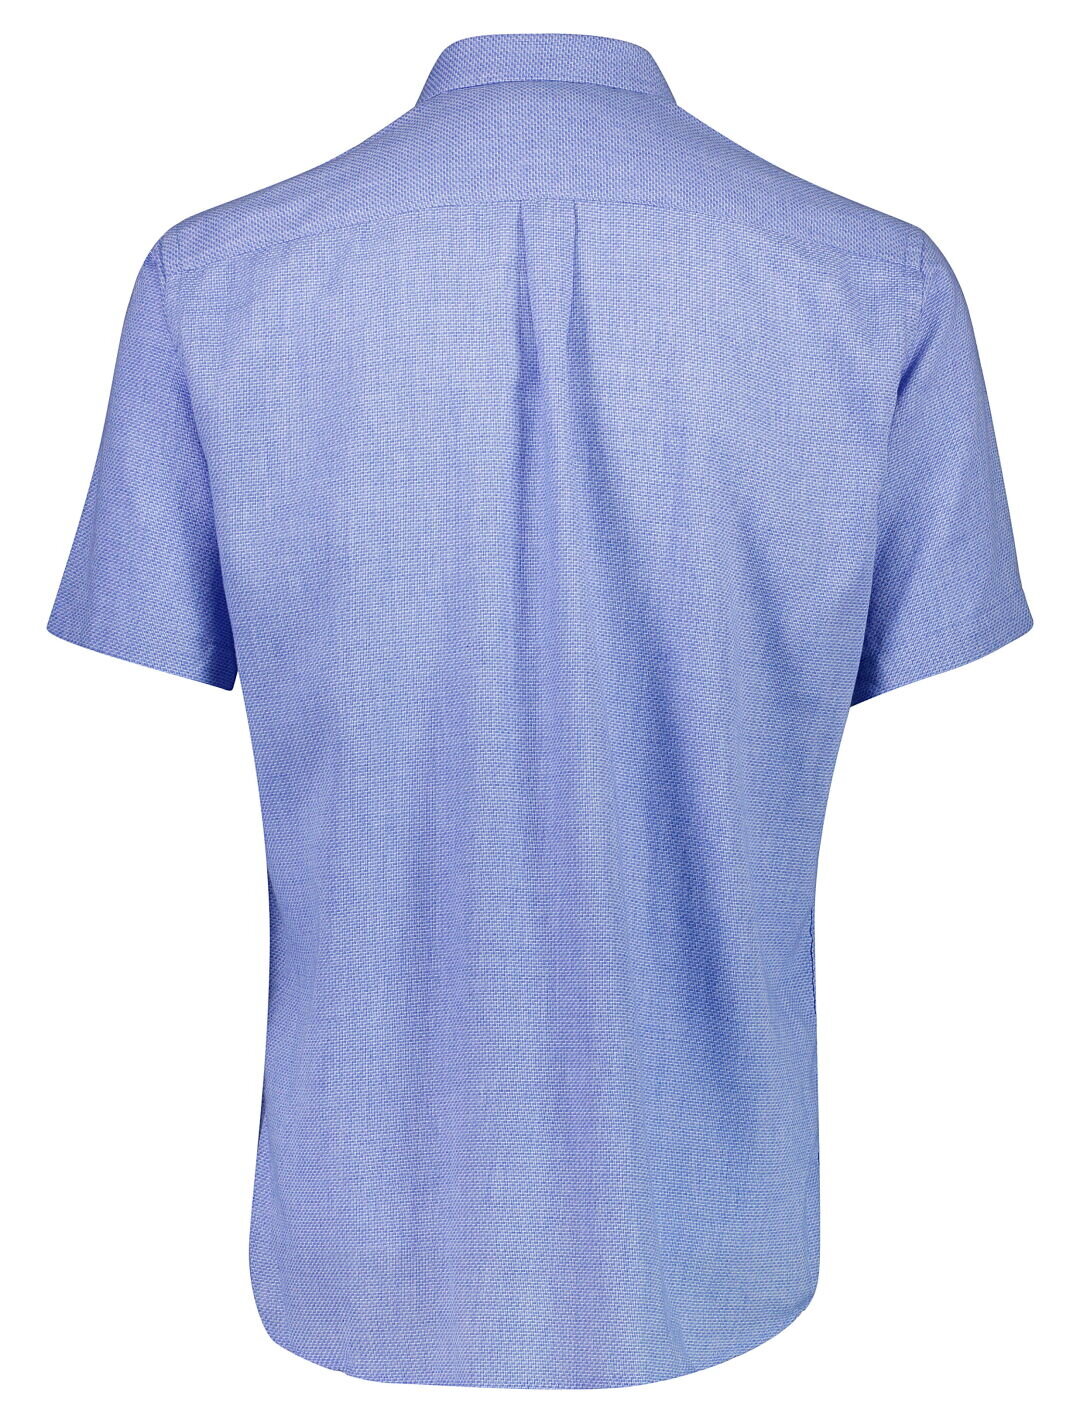 Kortärmad Enfärgad Skjorta - Light Blue